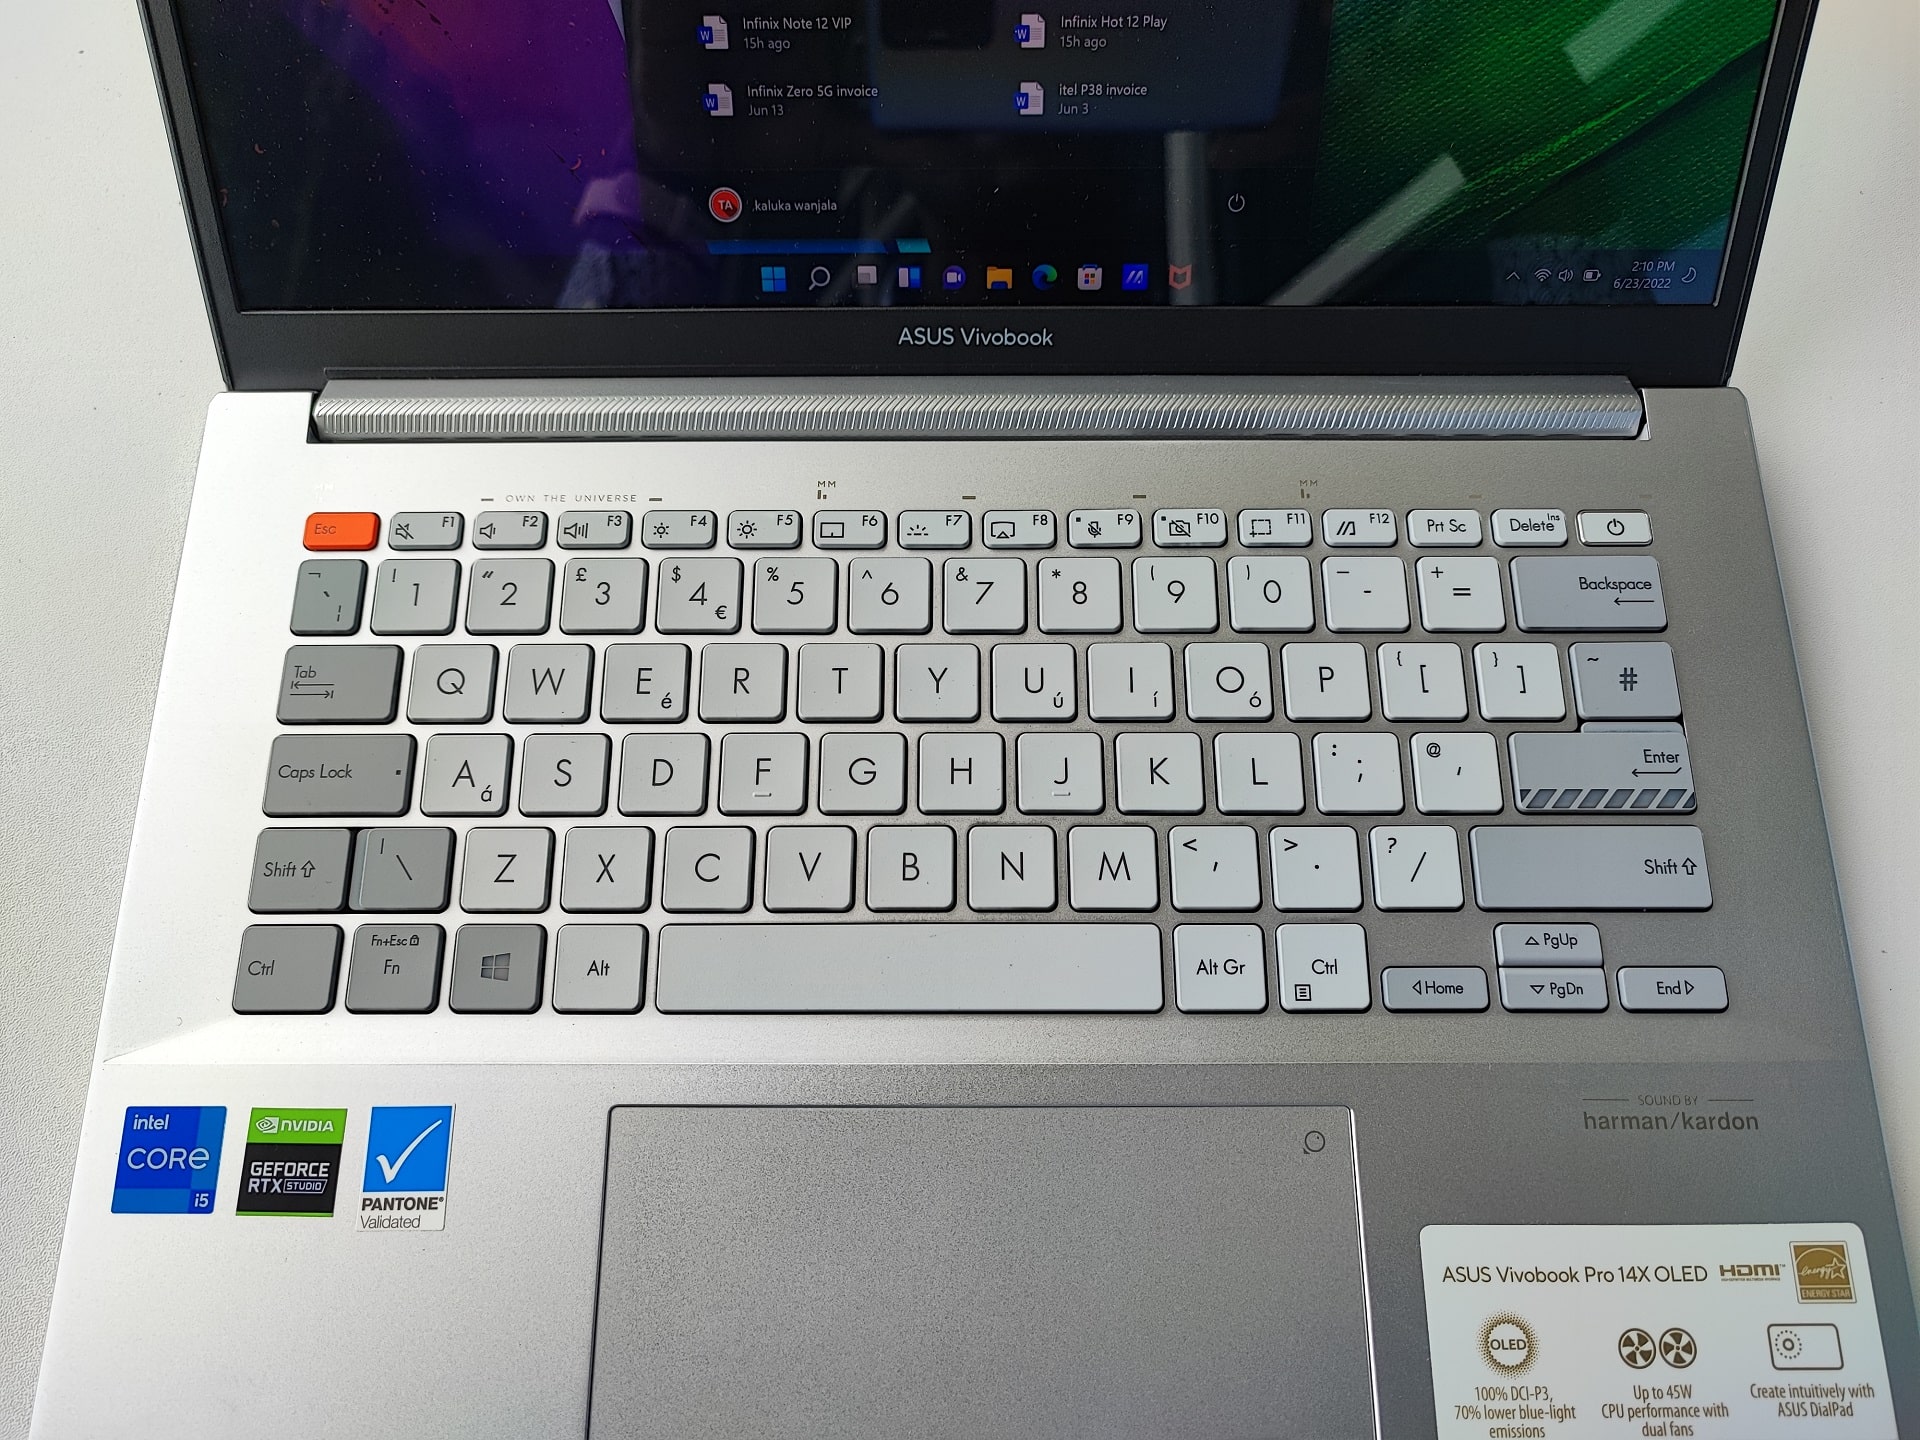 ASUS Vivobook pro 14x oled keyboard